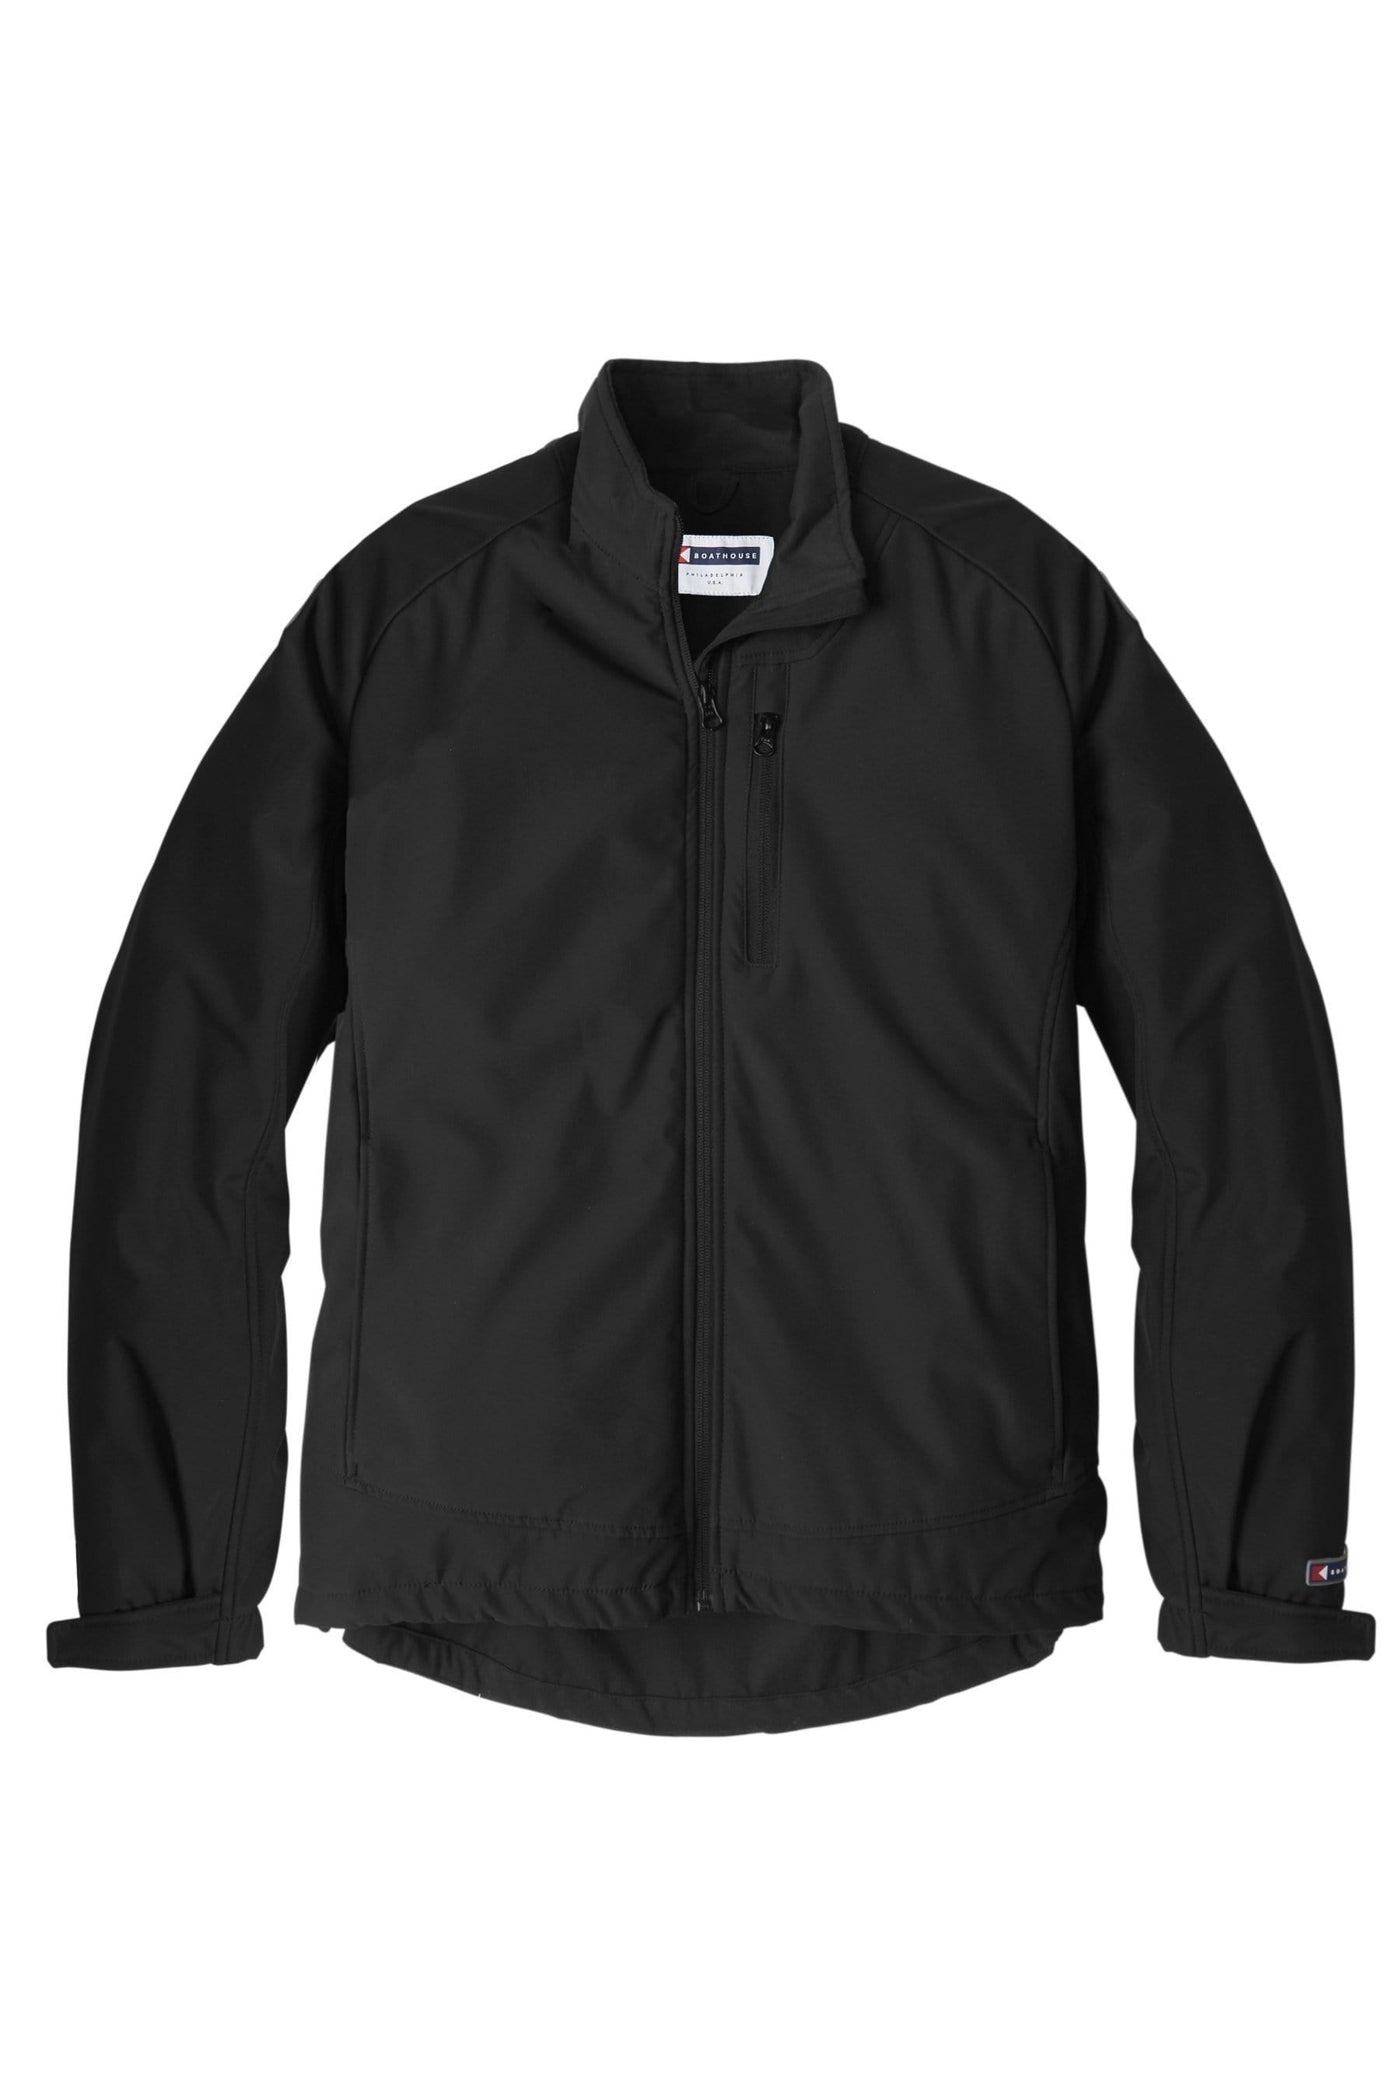 Men's Equinox Soft Shell Jacket Black / Small